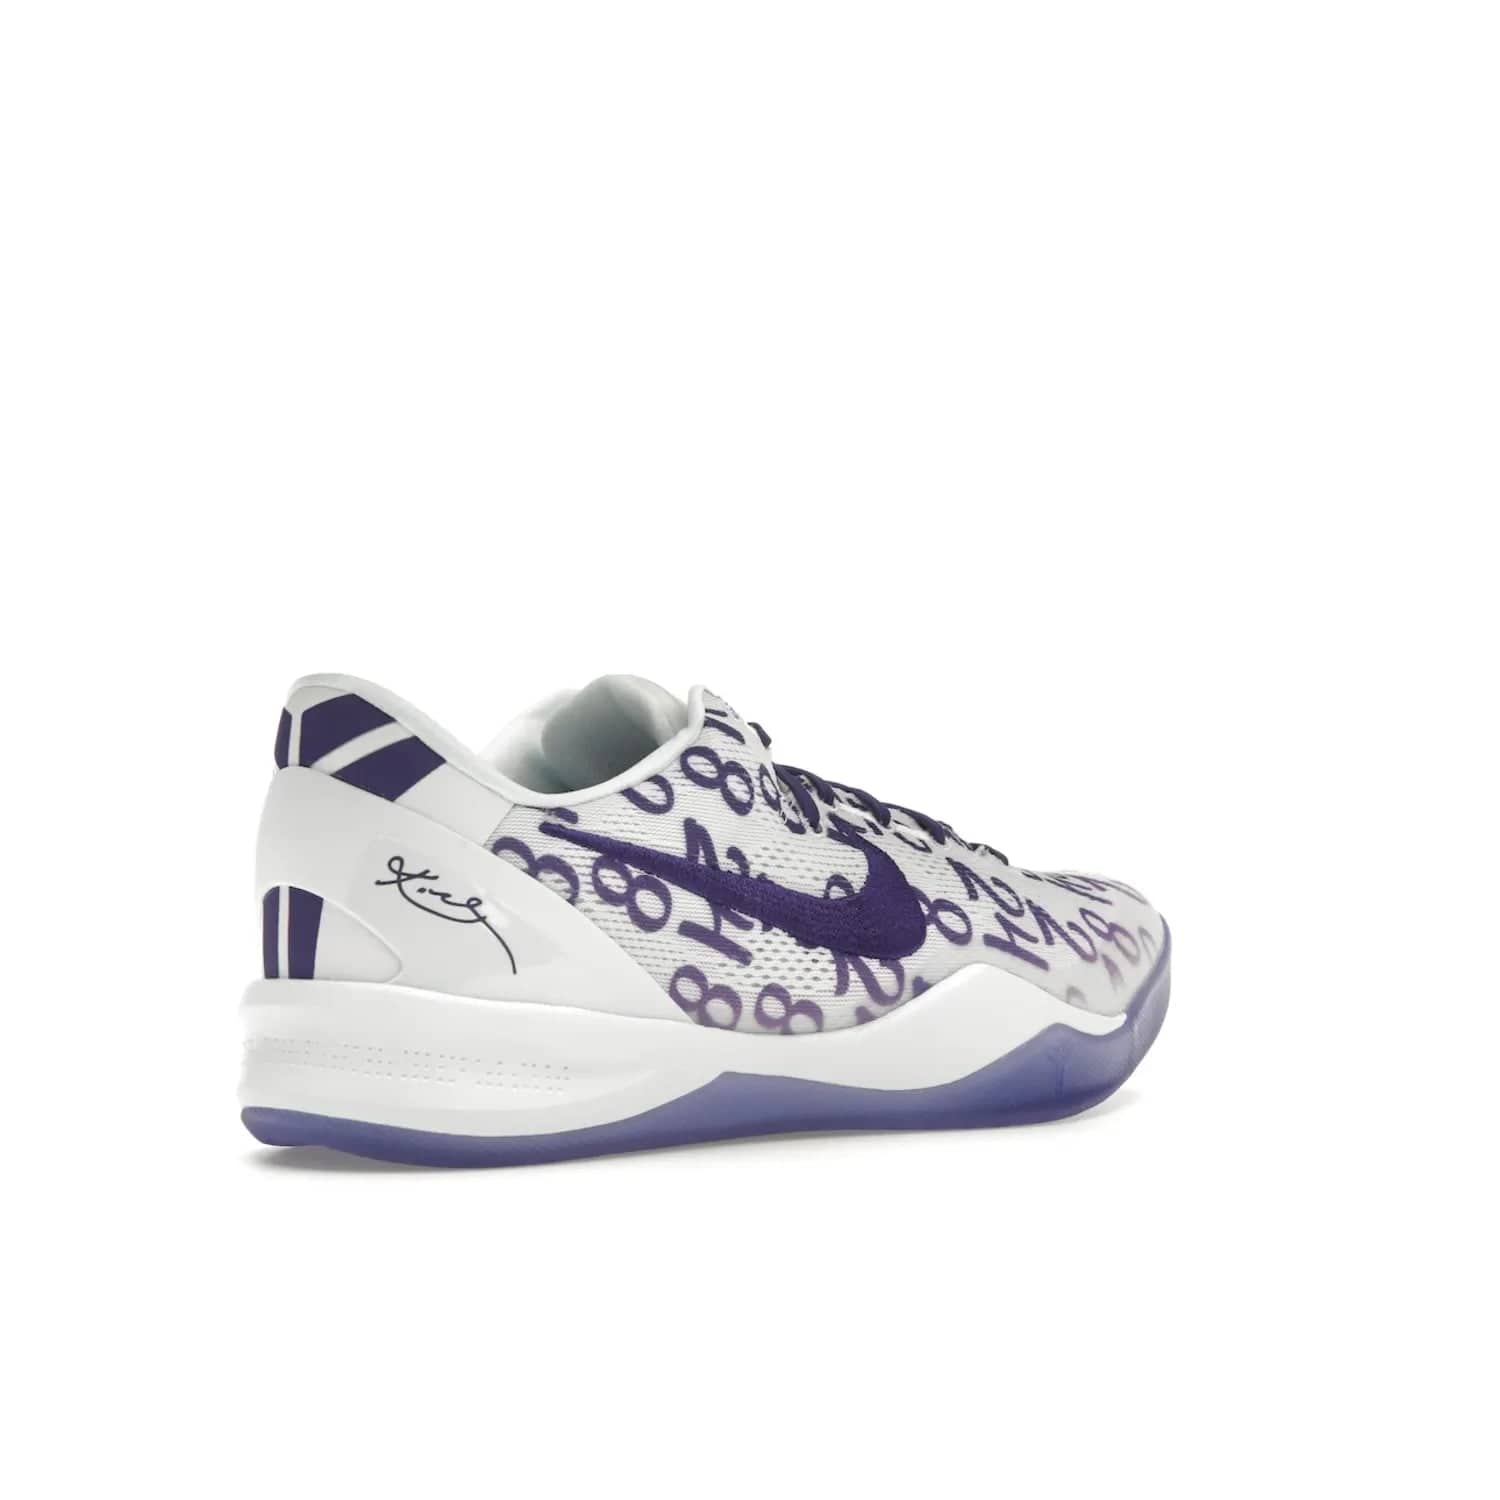 Nike Kobe 8 Protro Court Purple - Image 33 - Only at www.BallersClubKickz.com - 